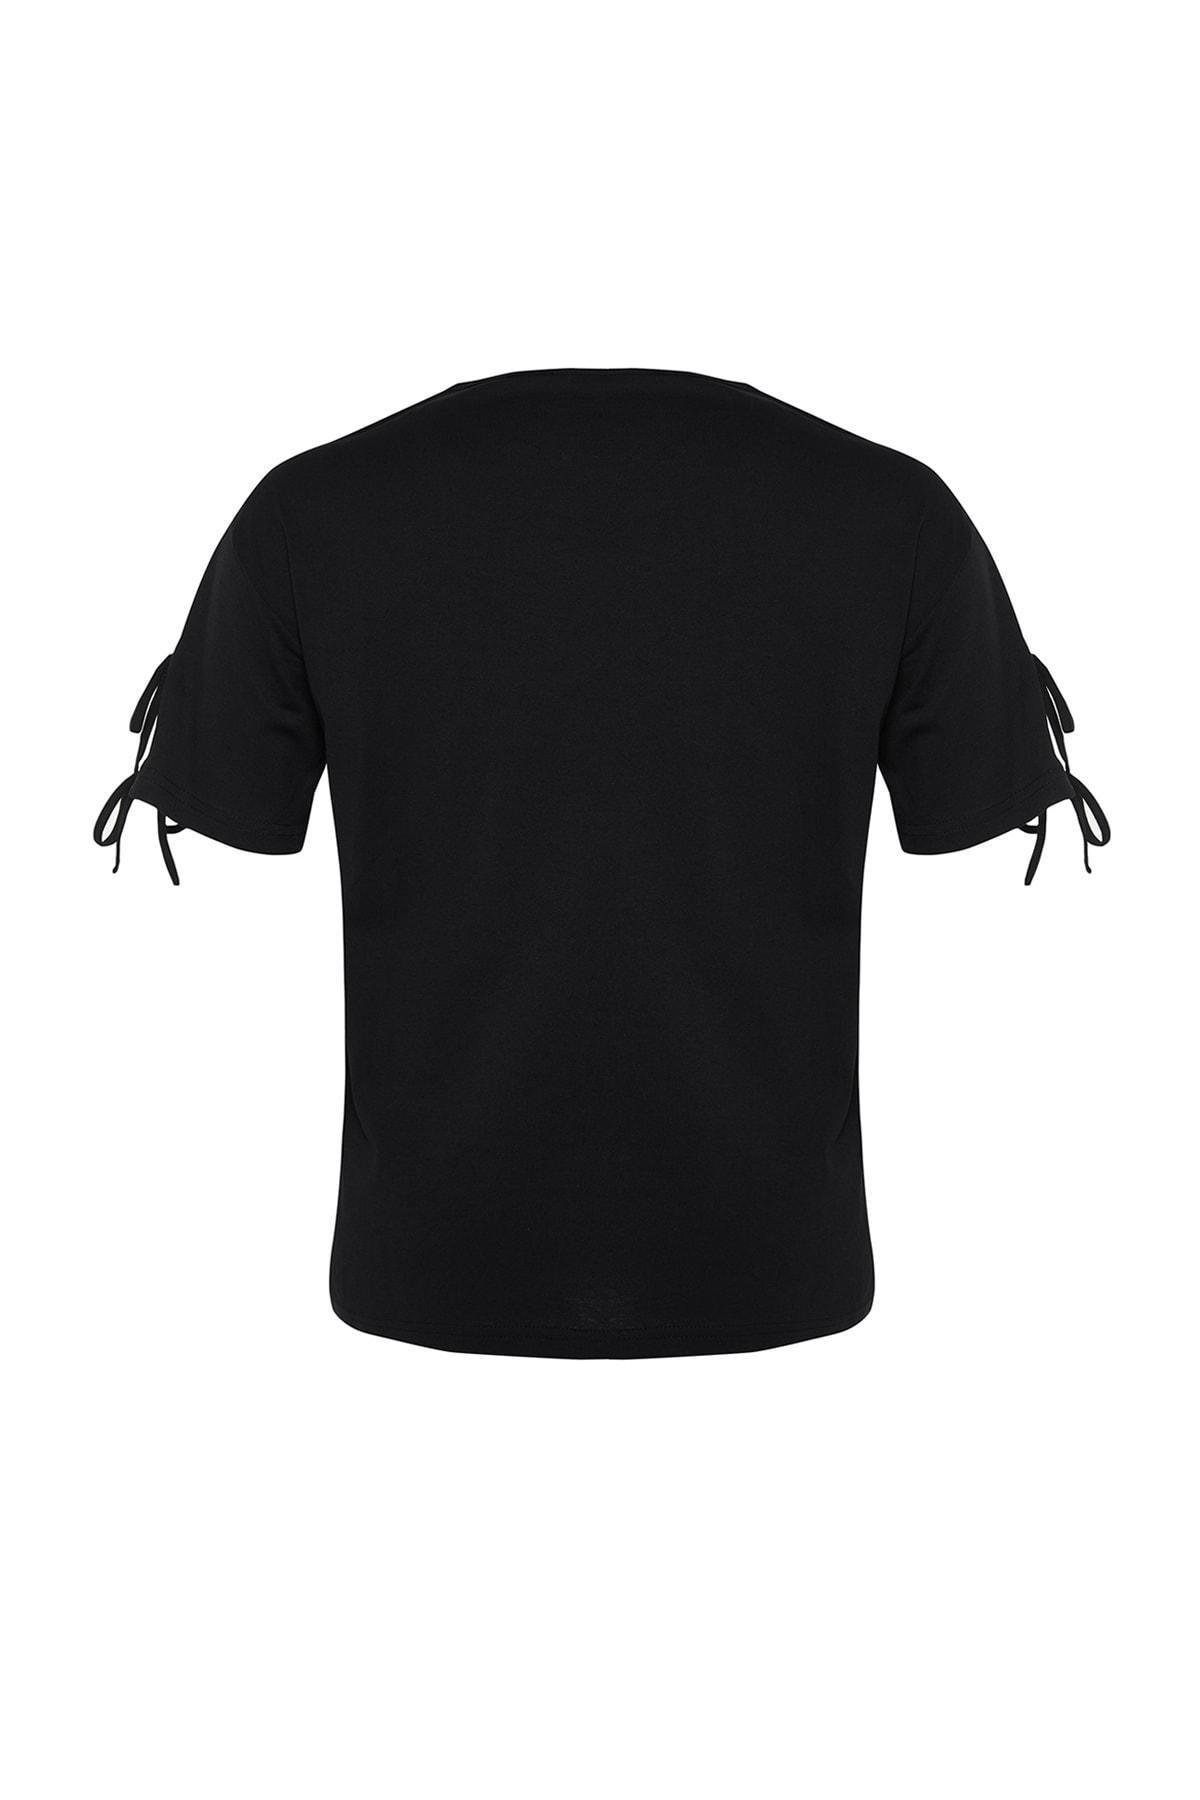 Trendyol - Black Relaxed Plus Size Tshirt